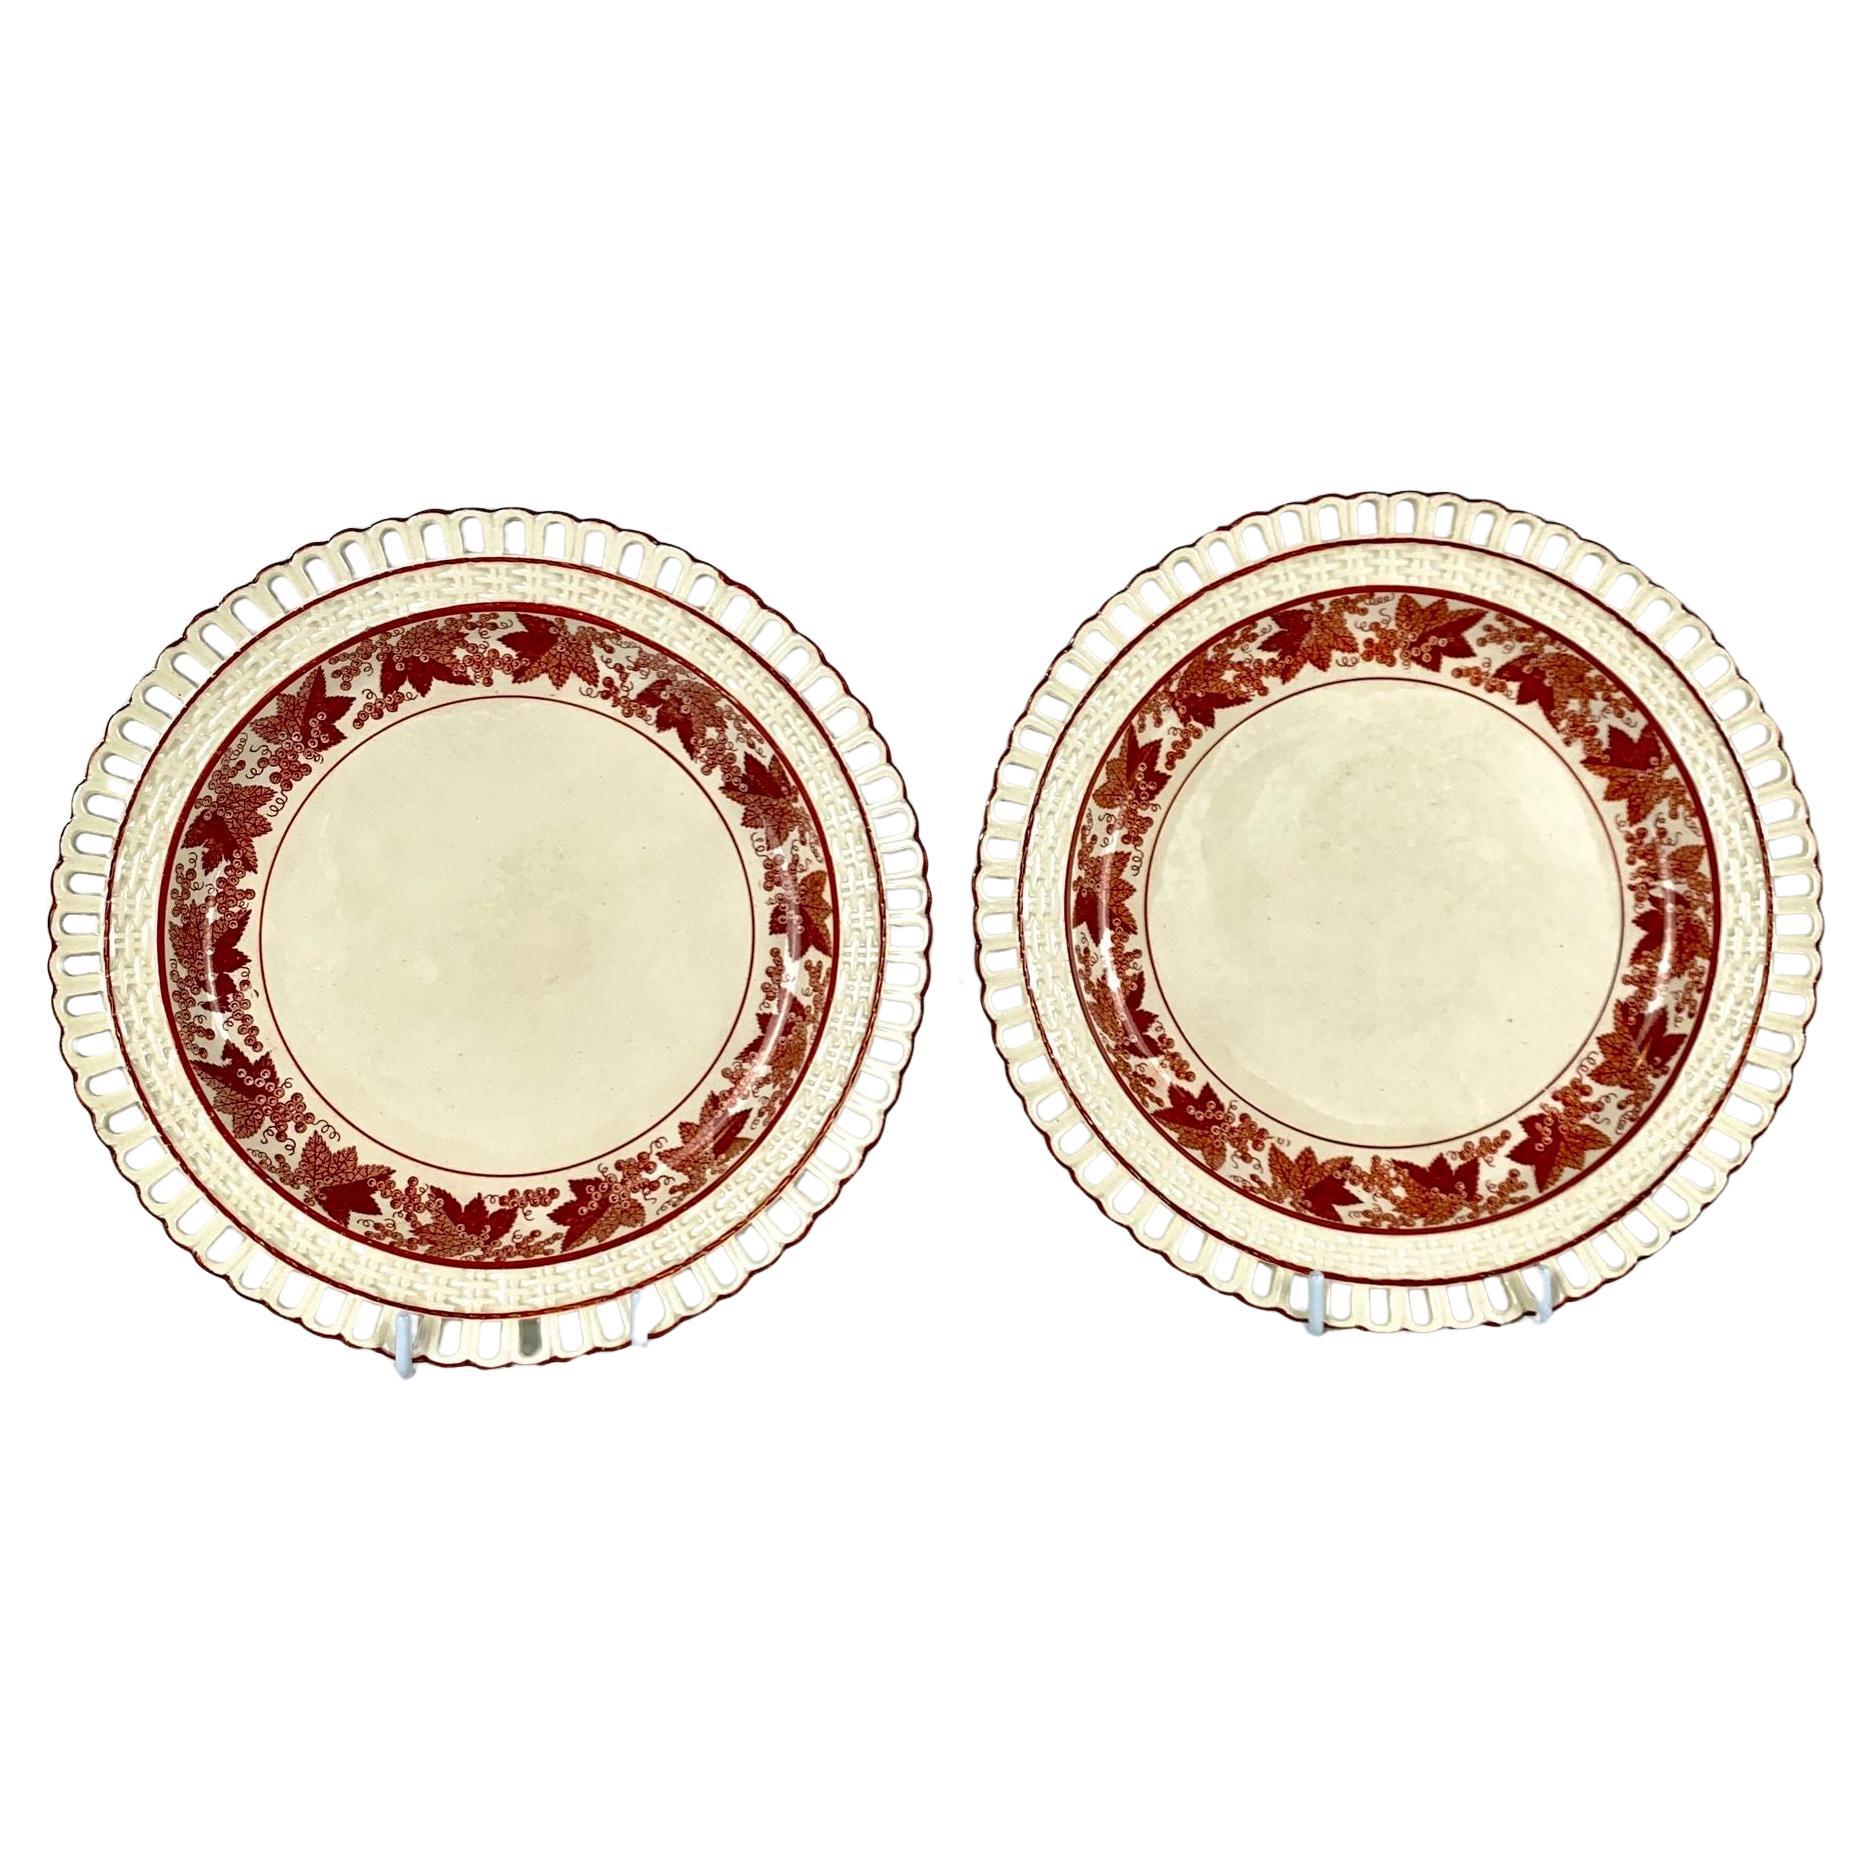 Pair Creamware Dessert Dishes with Sepia Decoration England Circa 1810